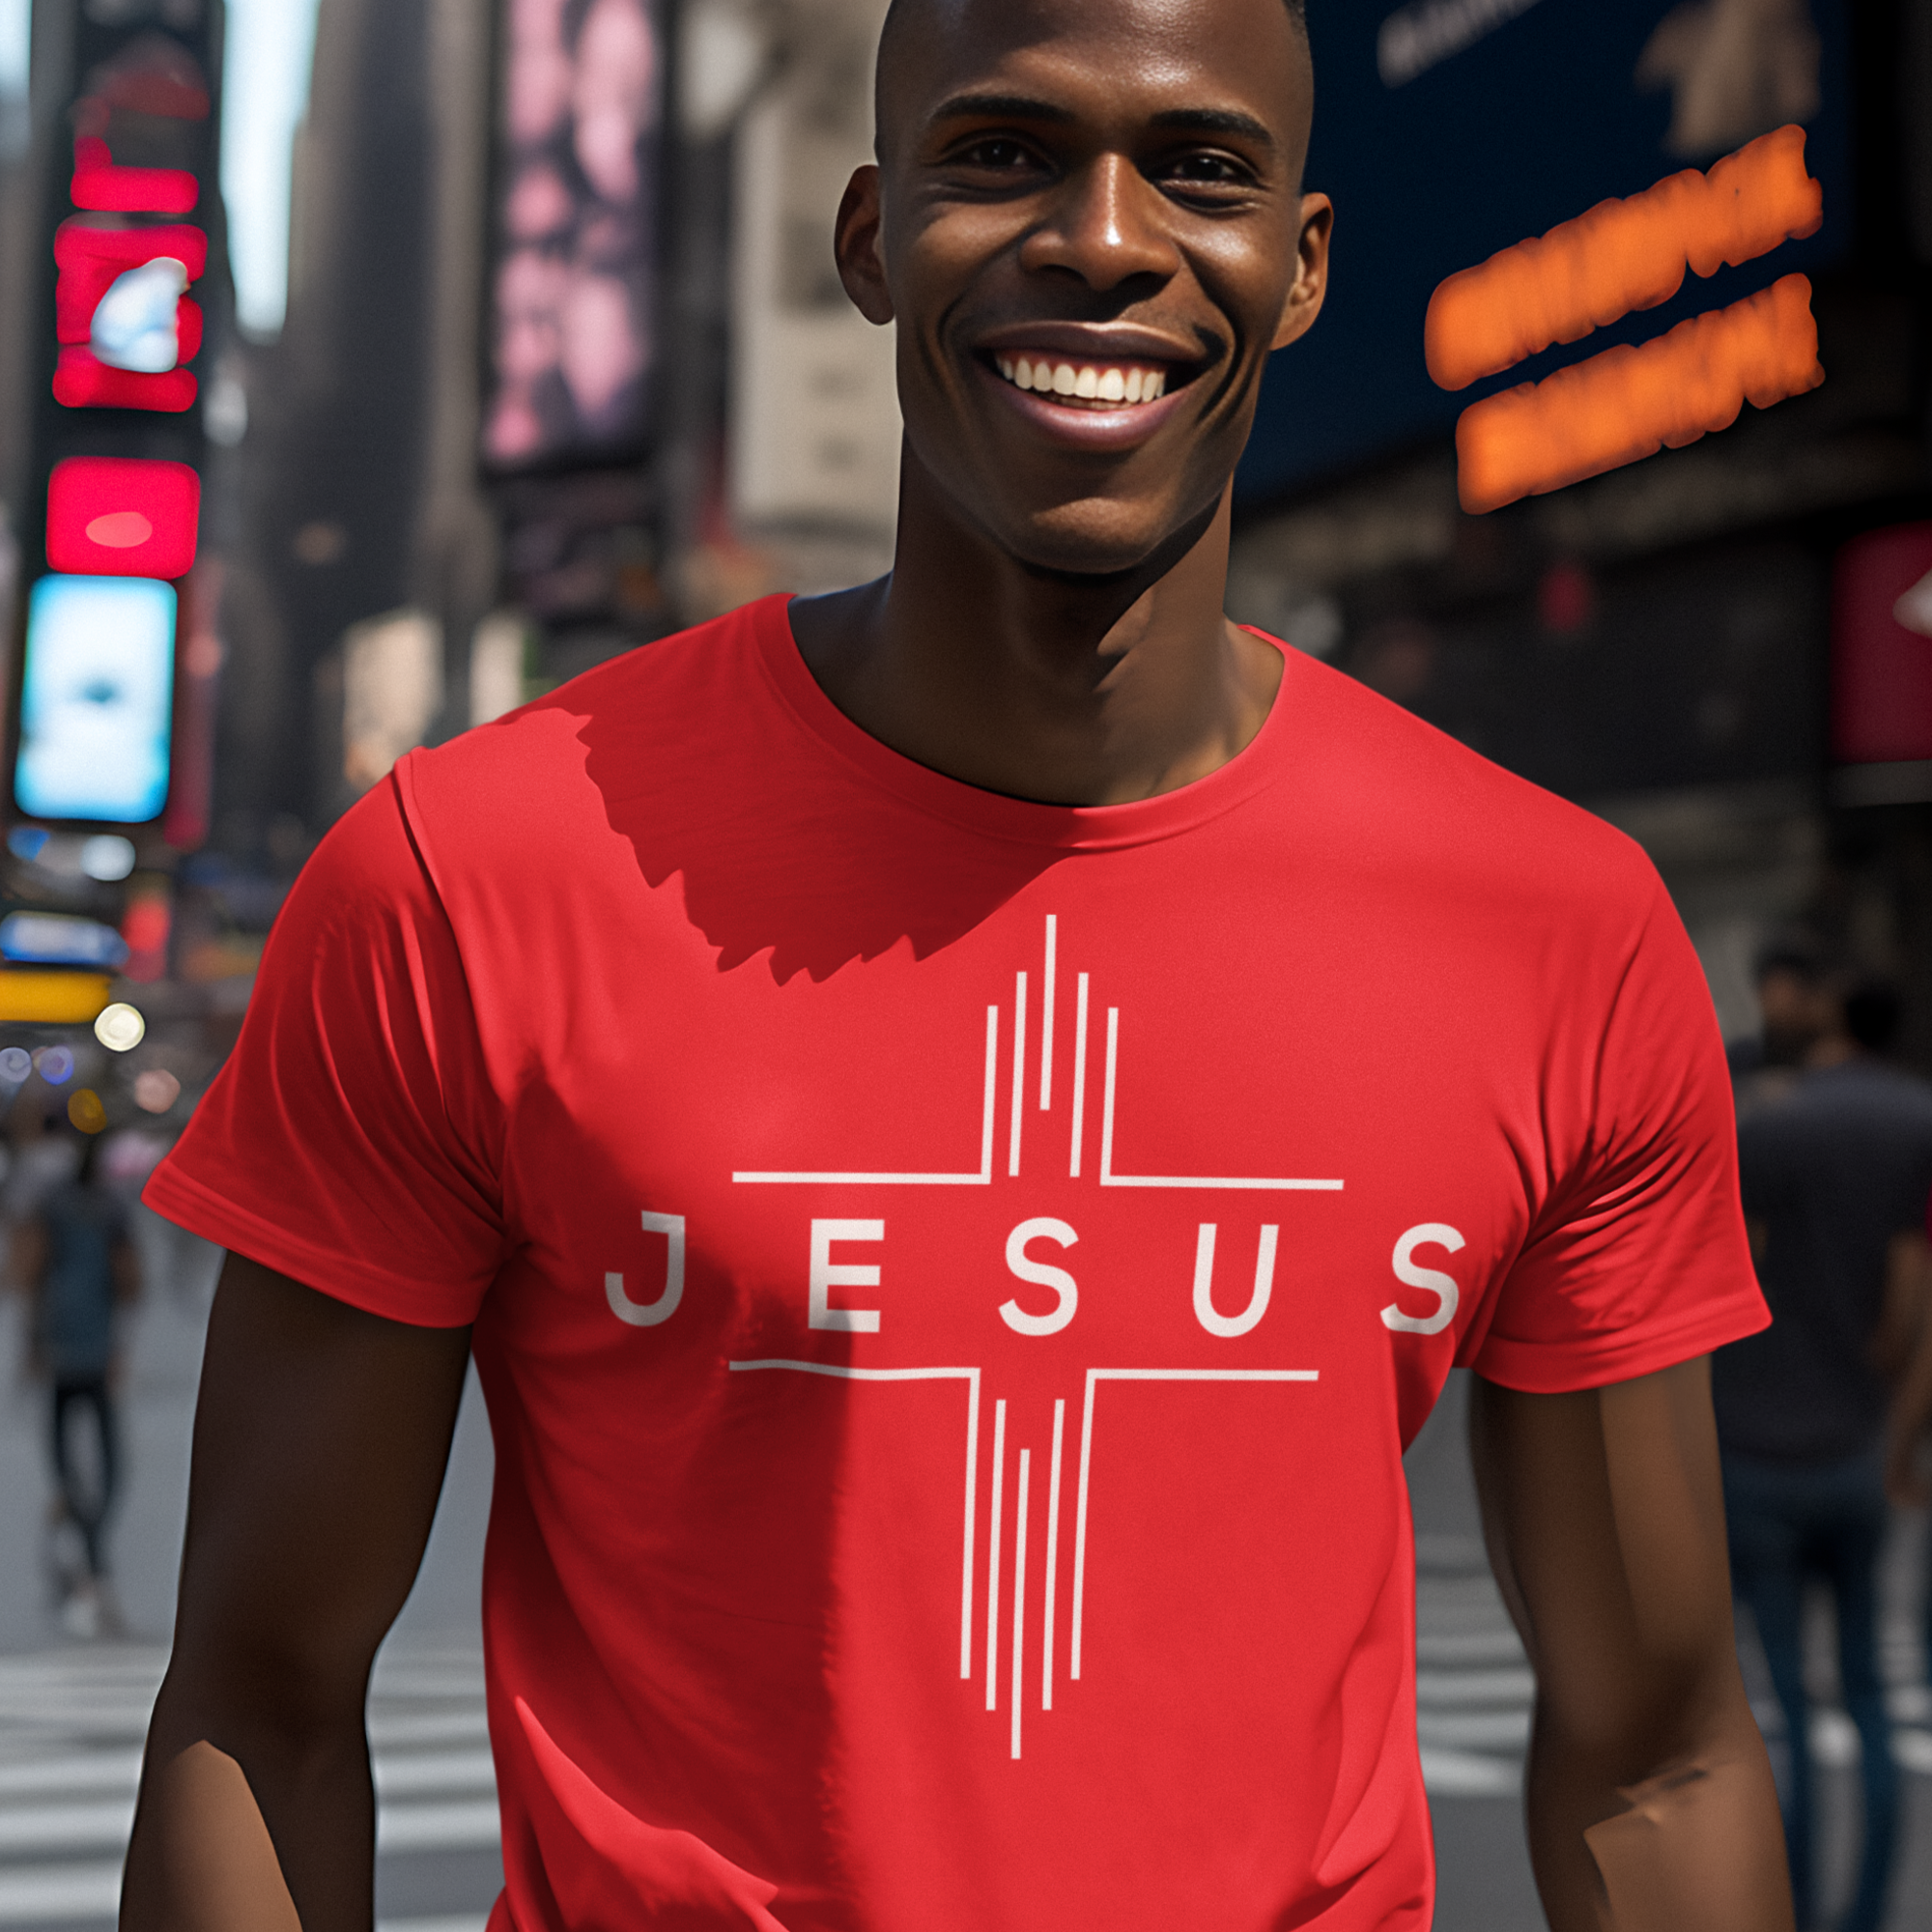 Jesus Cheveron Cross Men's Unisex Champion T-shirt - Black / Red - Matching Joggers Available Size: S Color: Black Jesus Passion Apparel